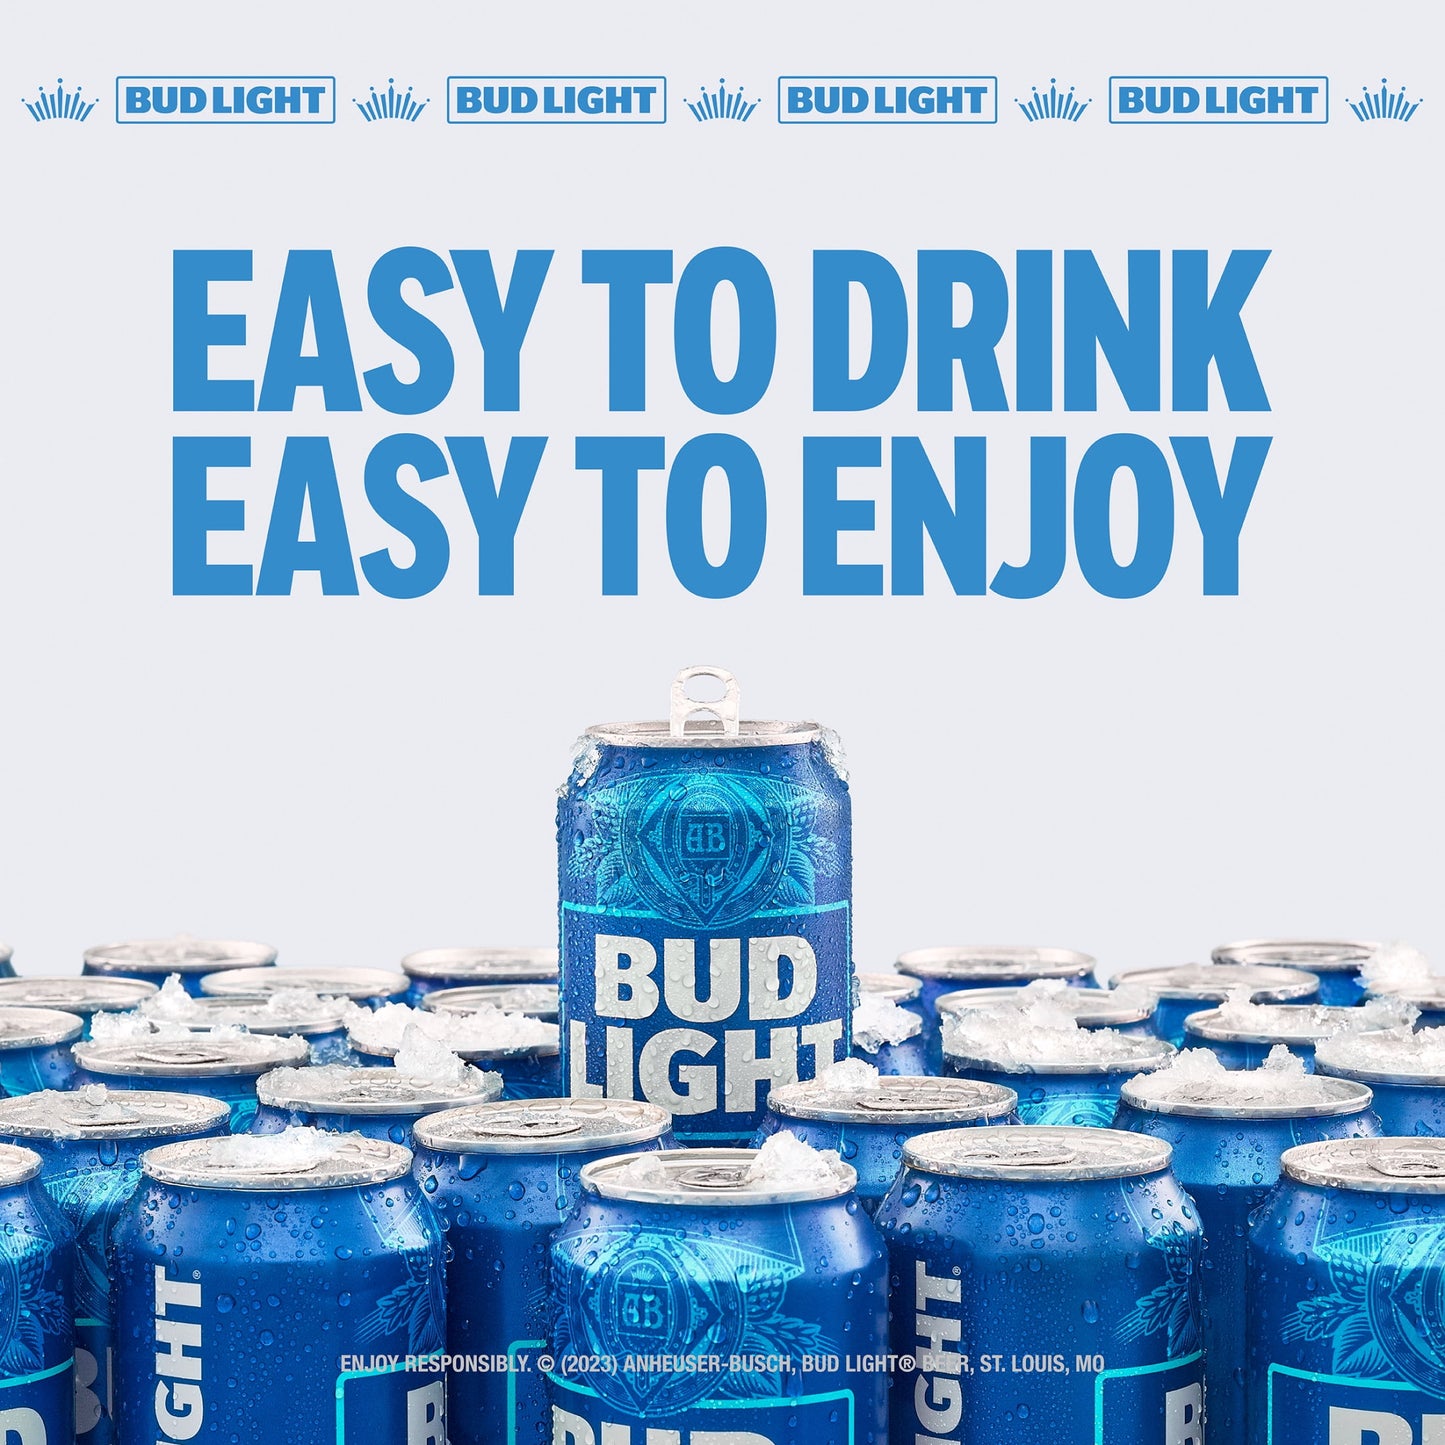 Bud Light Beer, 24 Pack, 12 fl oz Aluminum Cans, 4.2% ABV, Domestic Lager